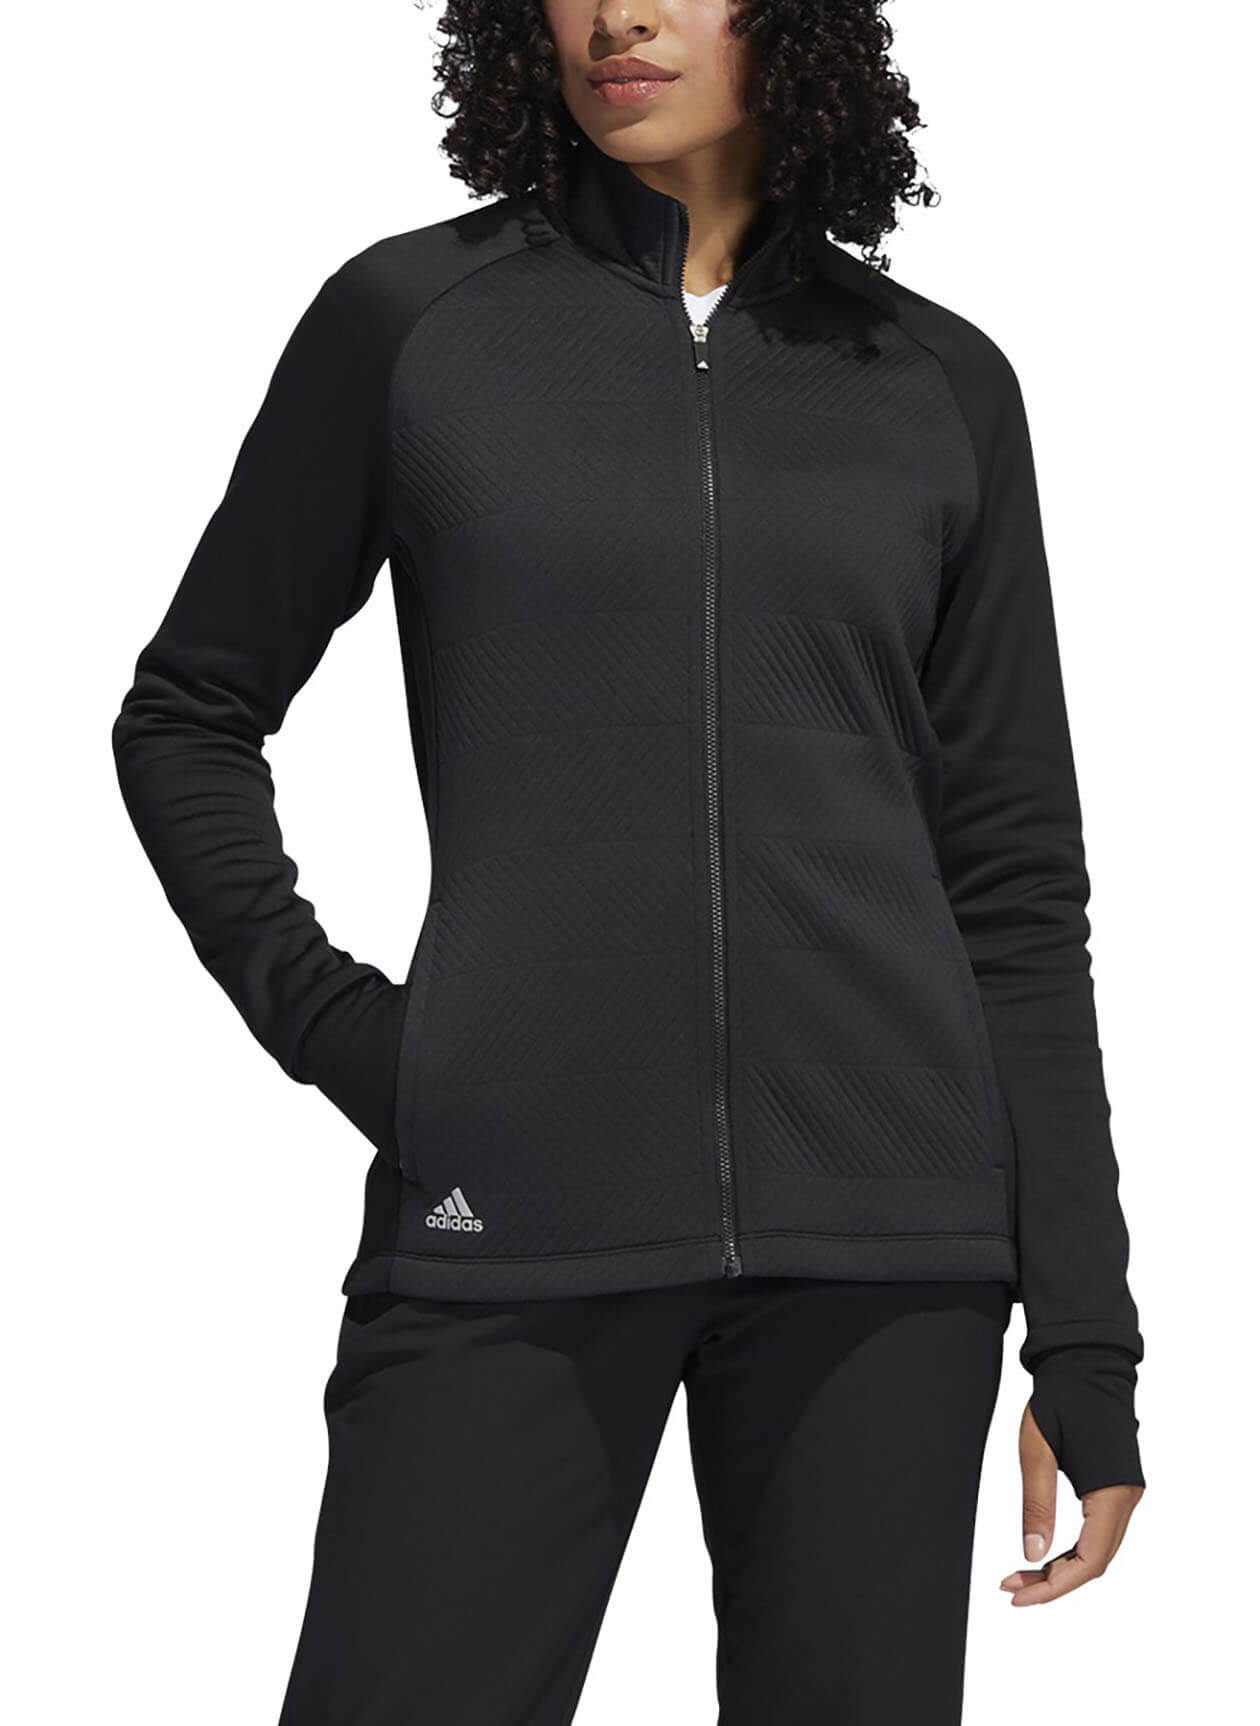 Adidas AD221 - Golf Women's Cold Ready Jacket